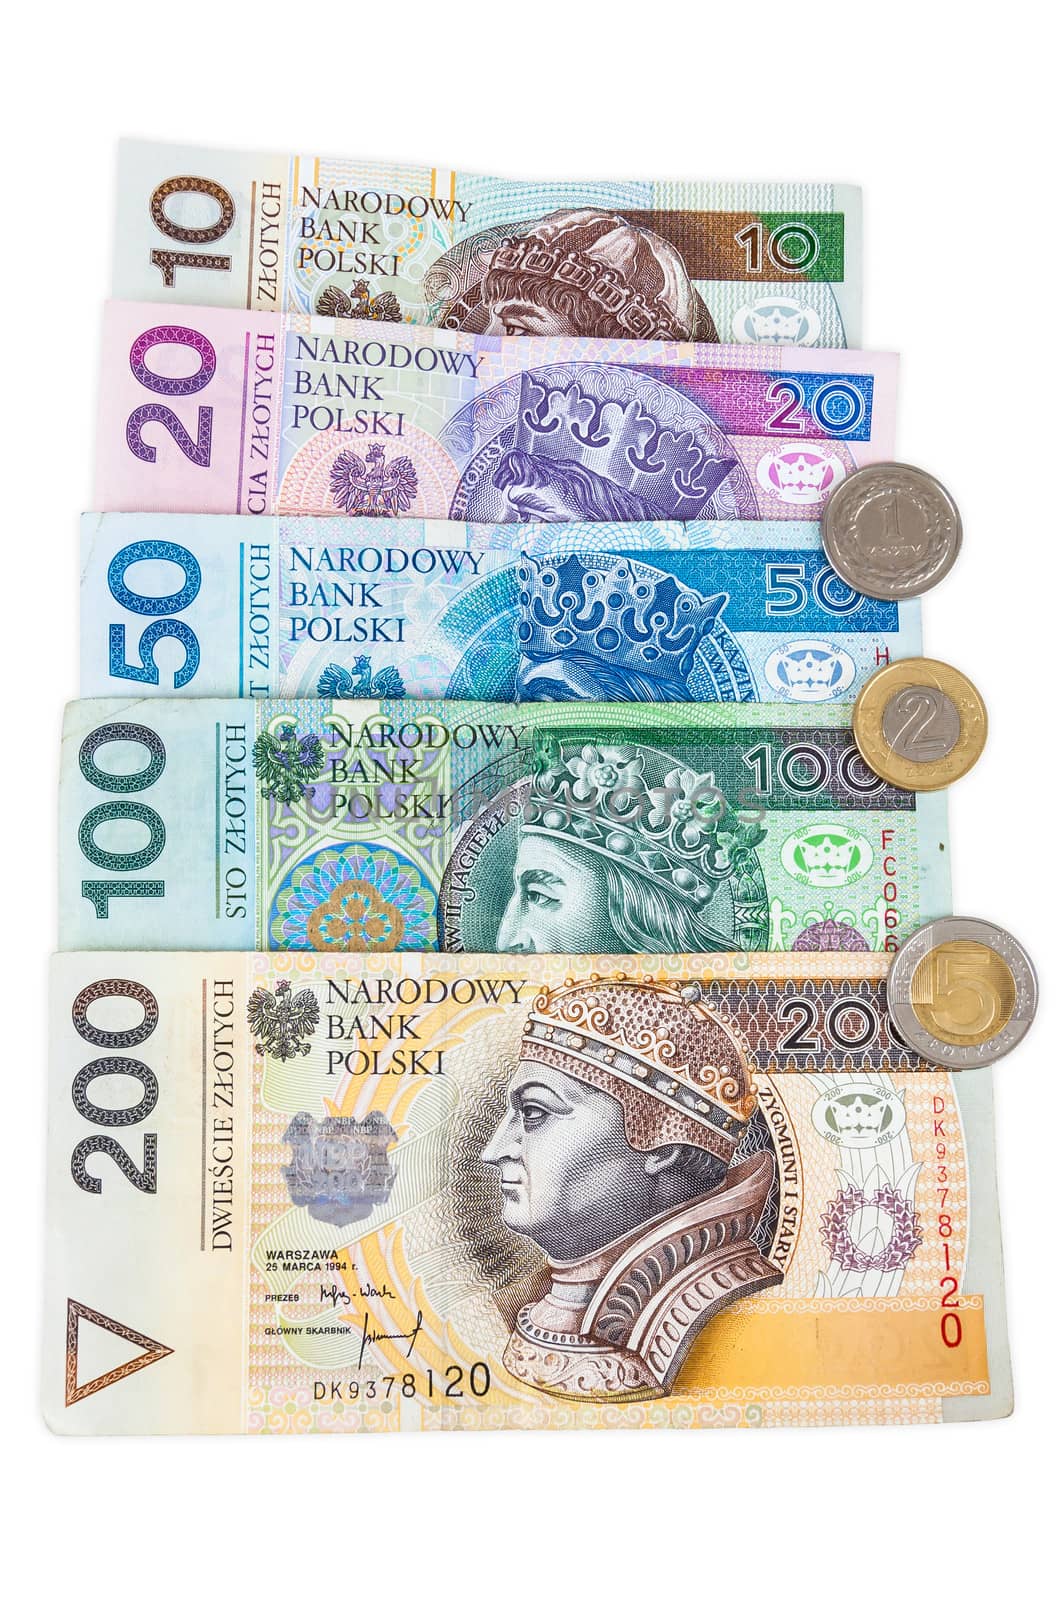 Set of polish banknotes and coins by mkos83